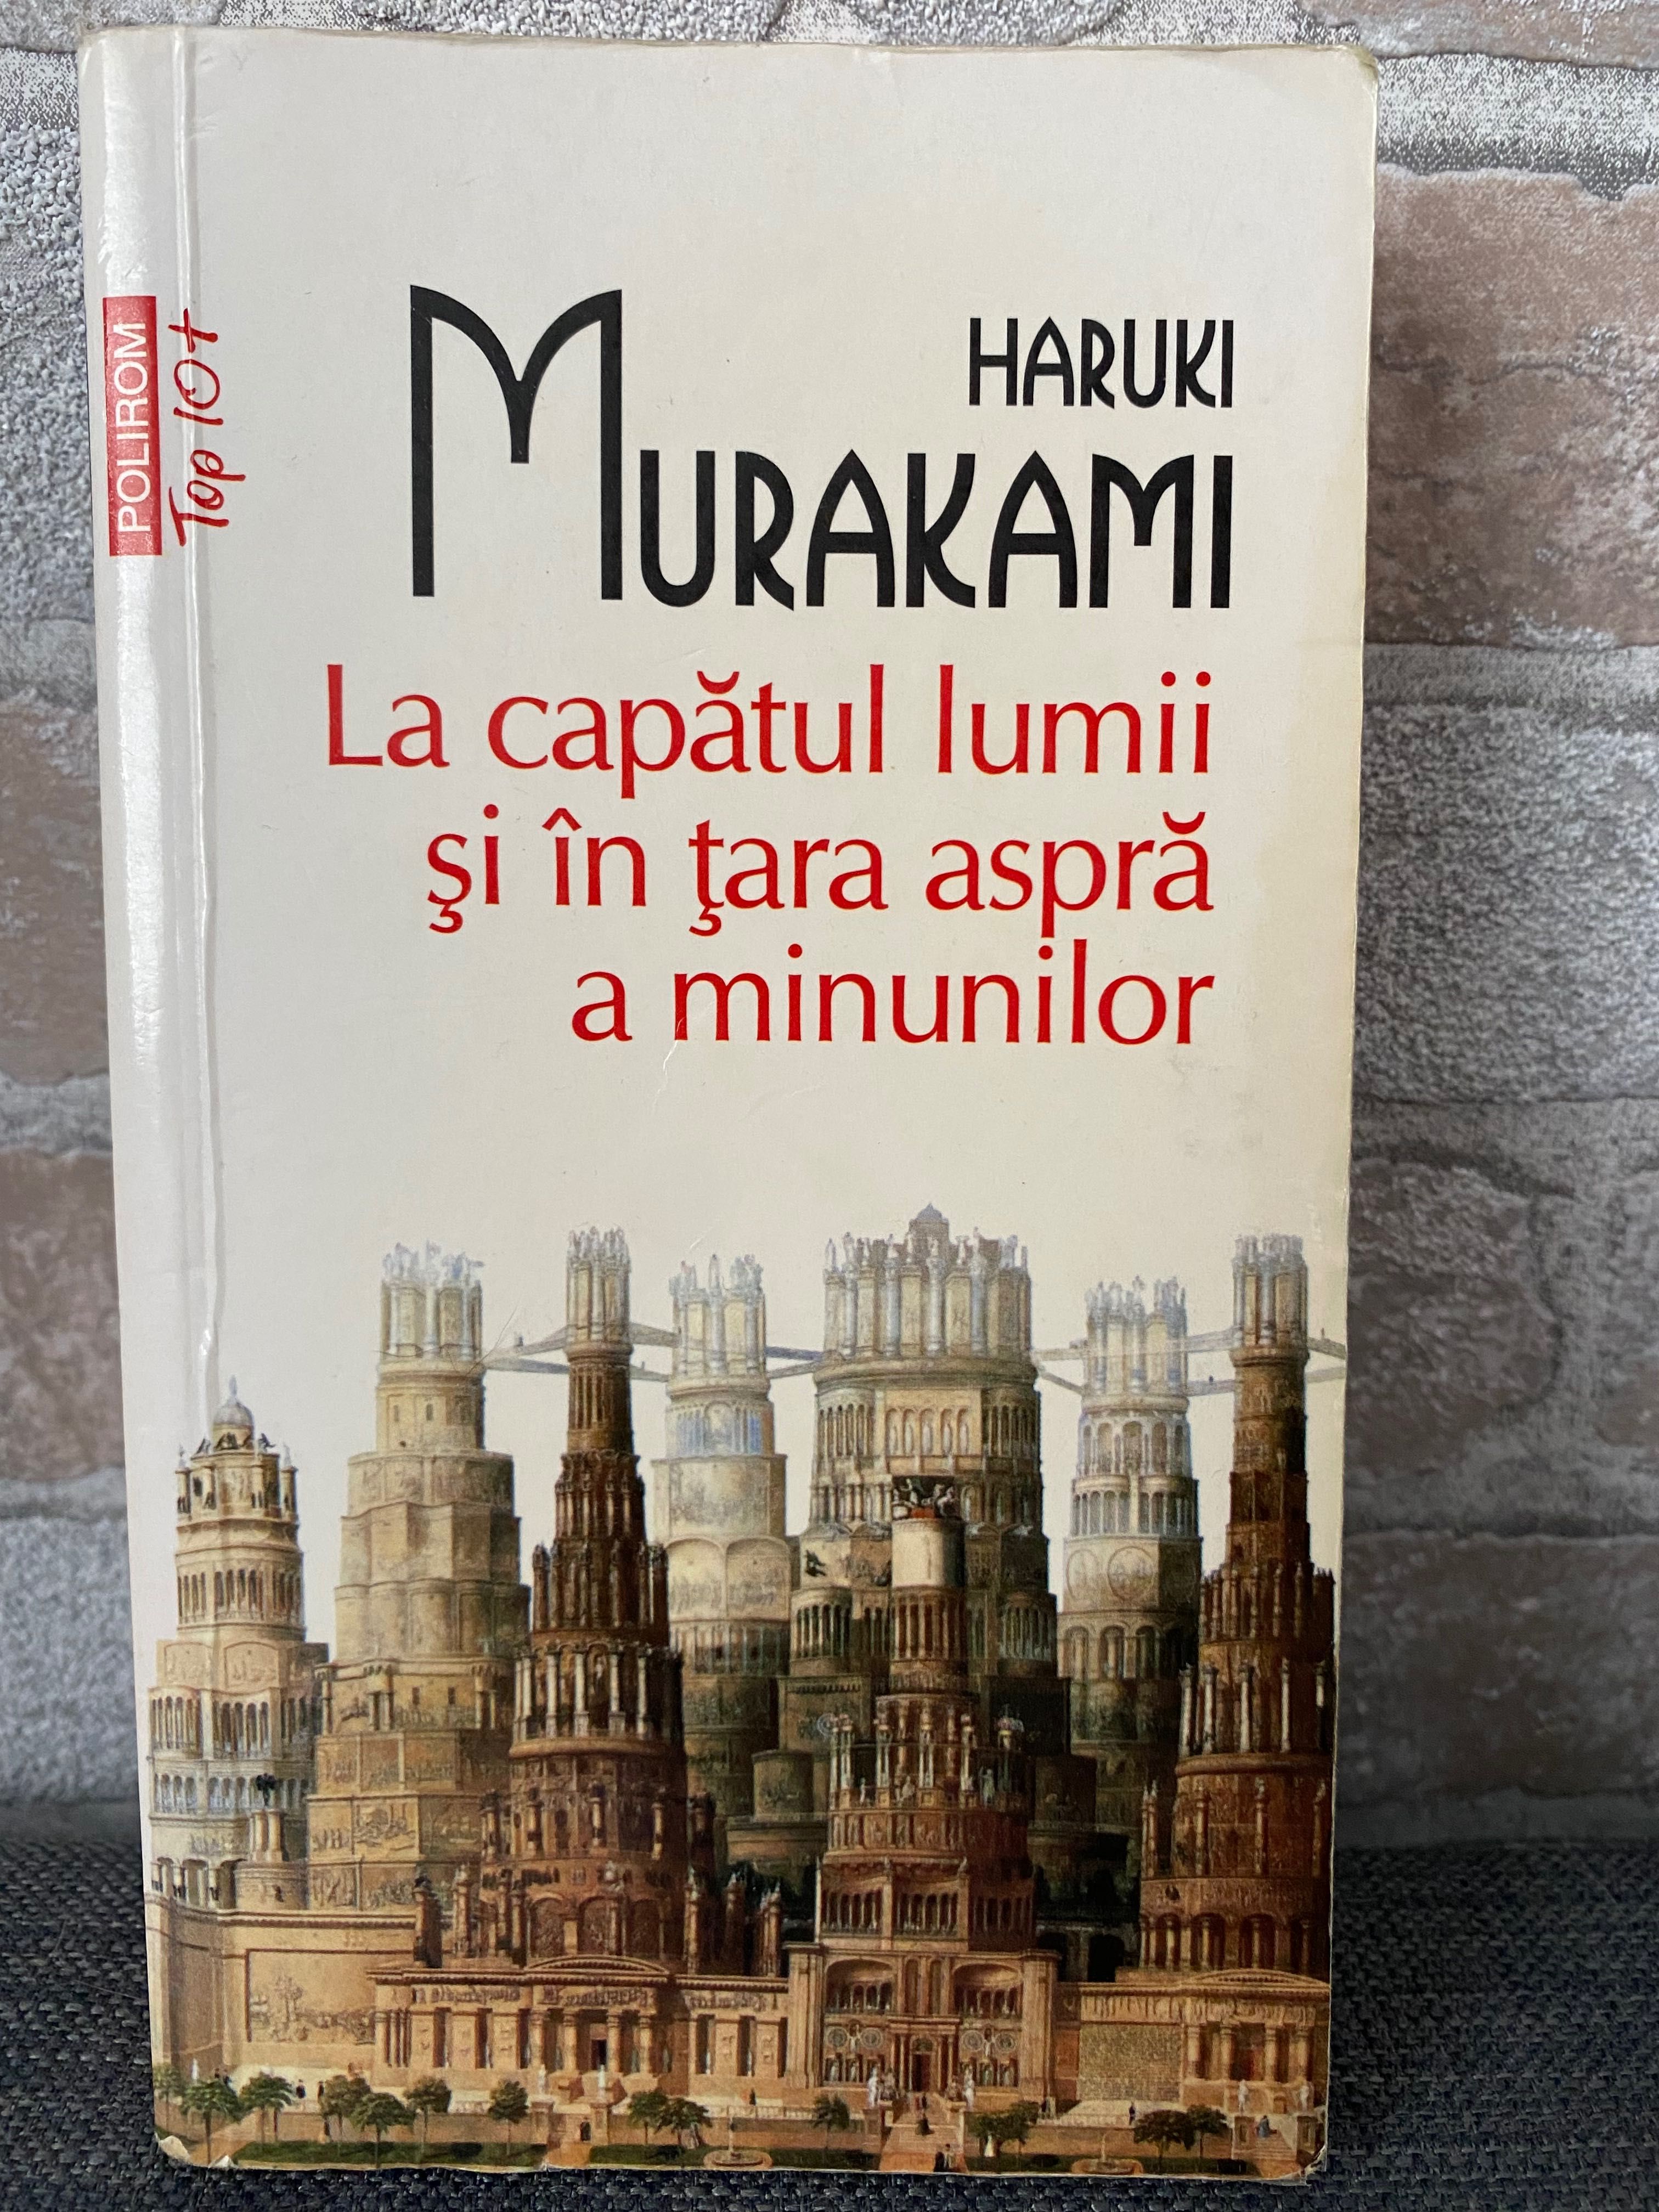 La capatul lumii si in tara aspra a minunilor, de Haruki Murakami